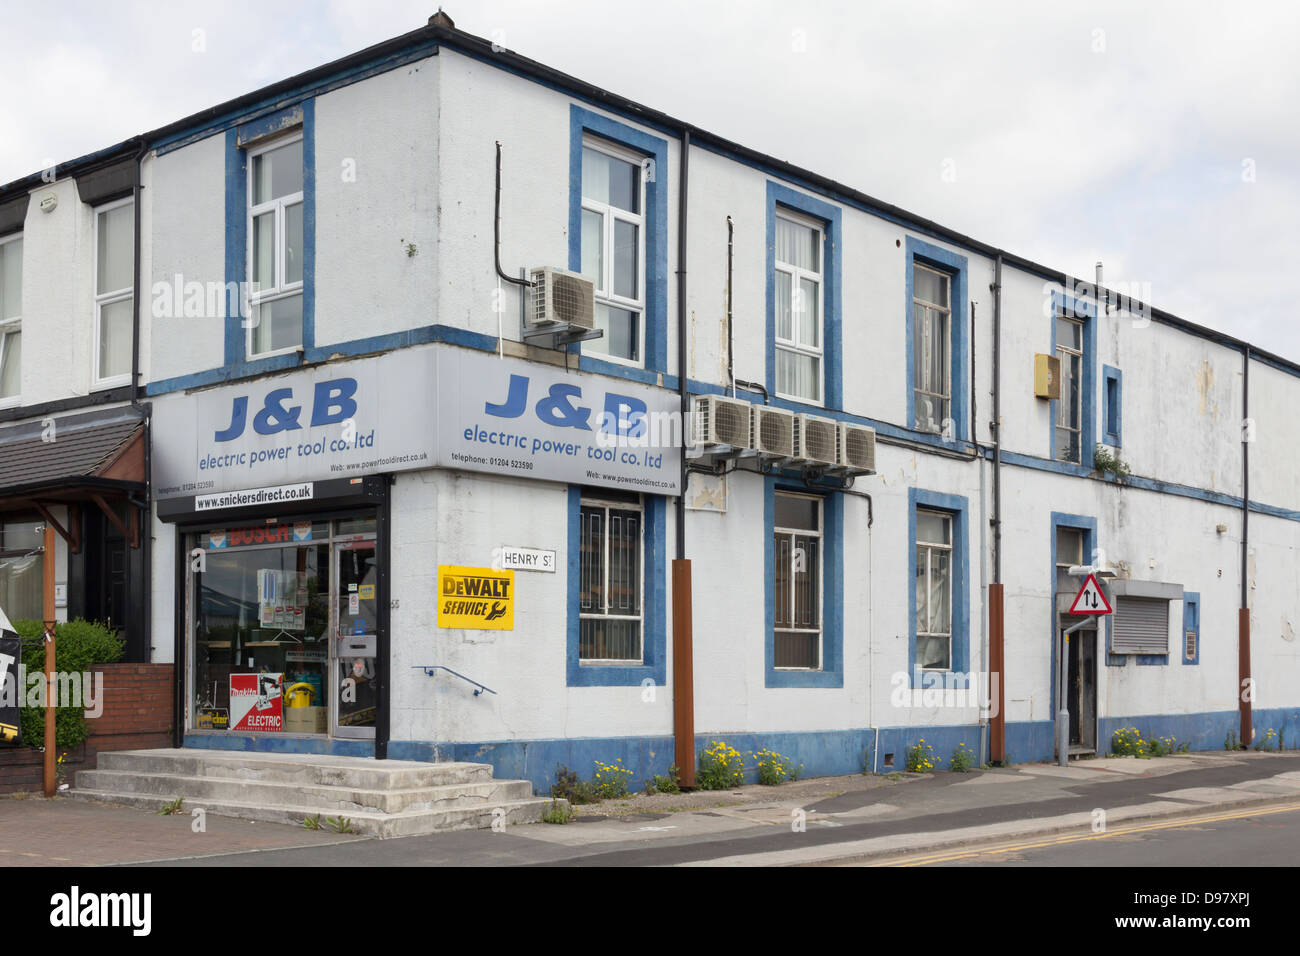 J & B Electric Power Tools C. Ltd. shop in Bolton. Sales and repair of electric power tools including DeWalt servicing. Stock Photo